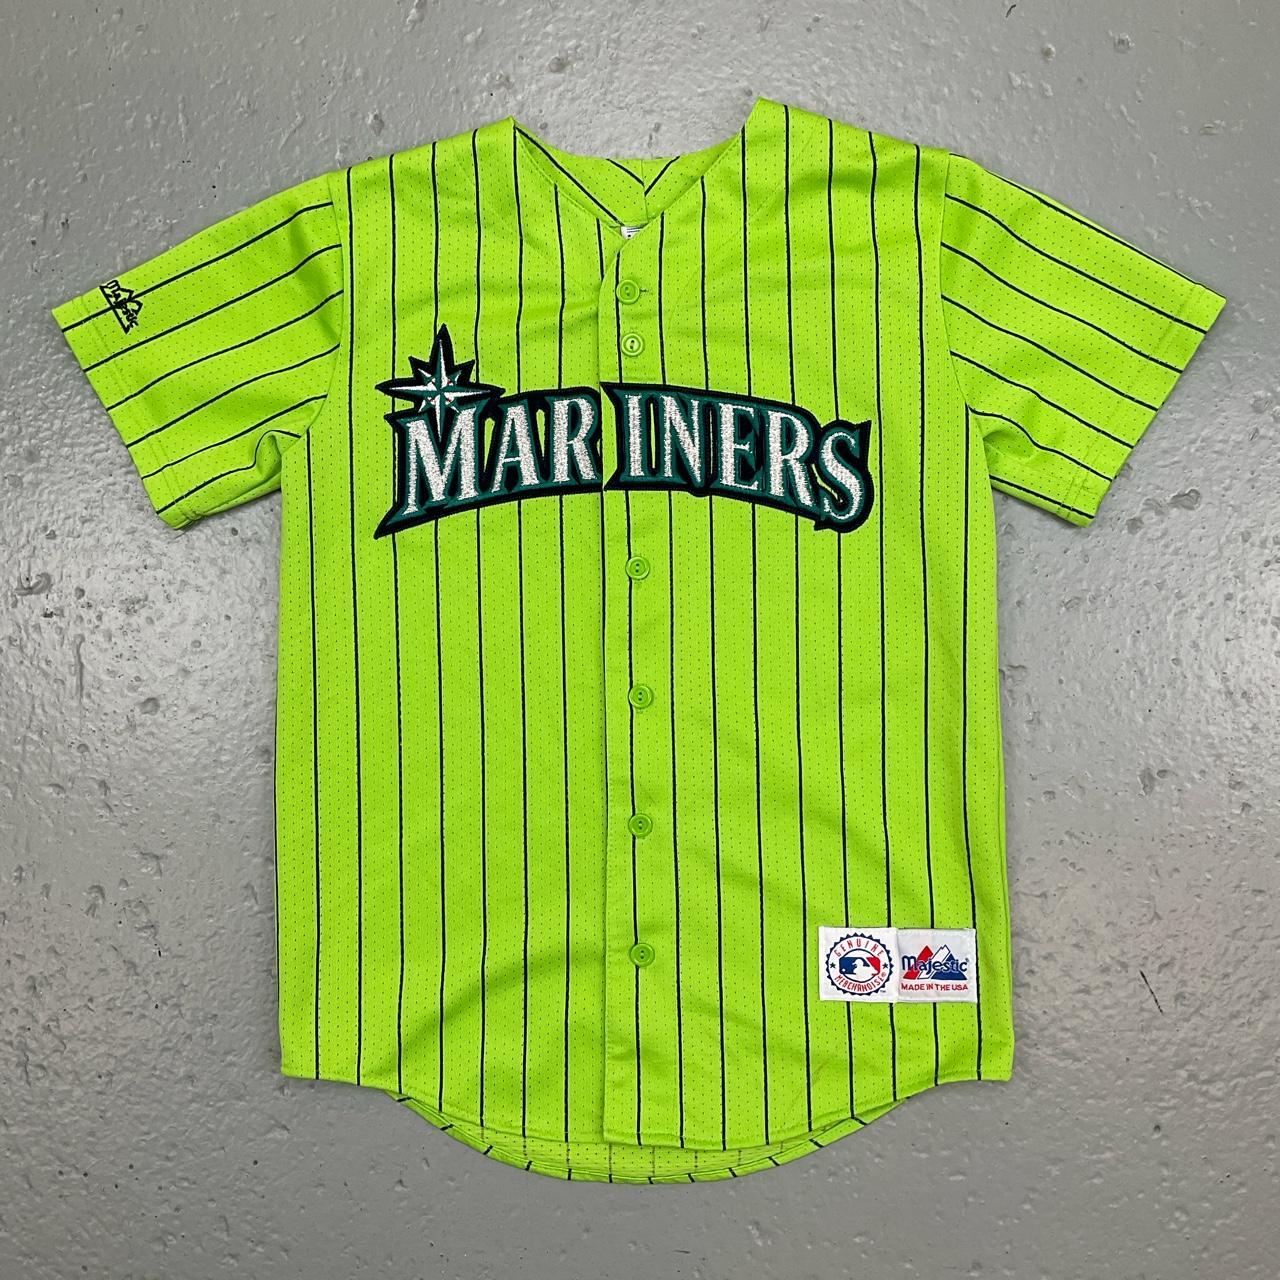 1996 Seattle Mariners spring training T-shirt brand - Depop